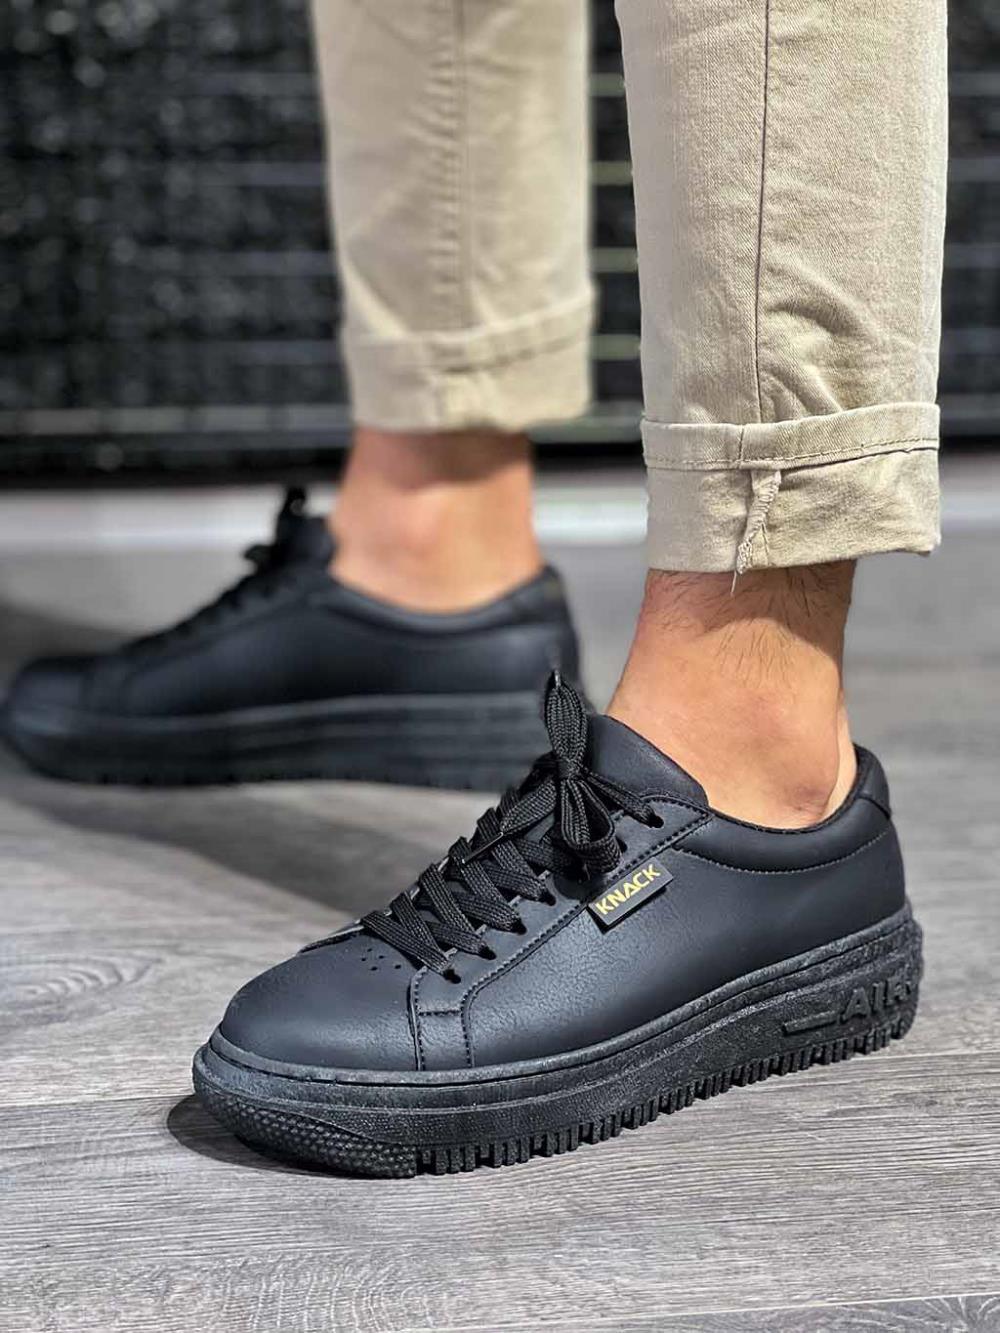 Men's Casual Shoes sneakers 225 Black (Black Sole) - STREET MODE ™